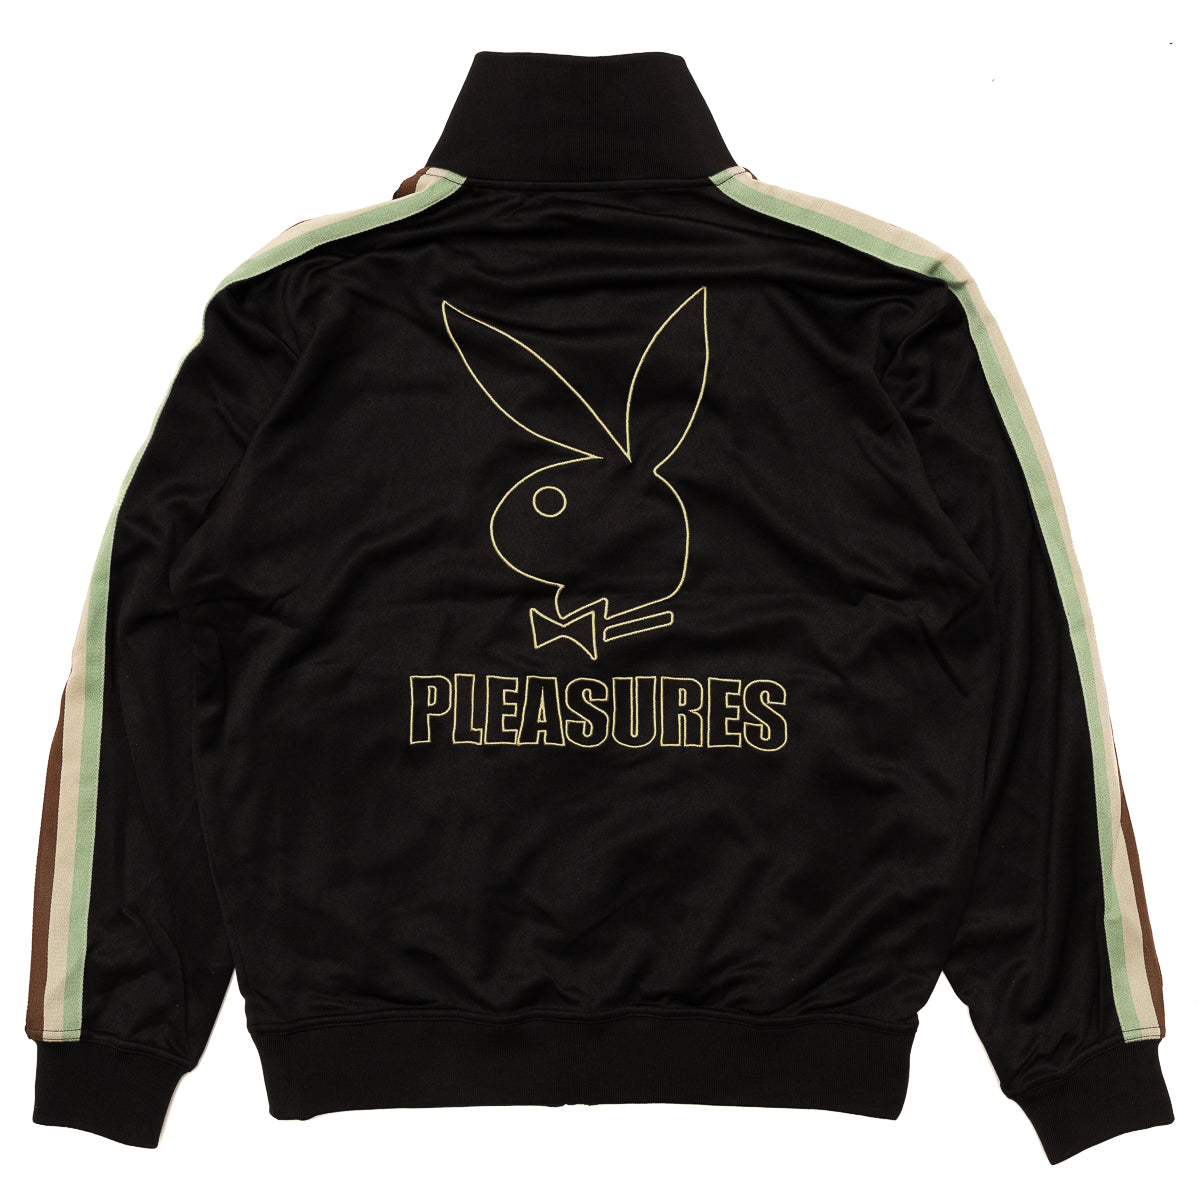 Pleasures x Playboy Wicked Track Jacket 'Black'